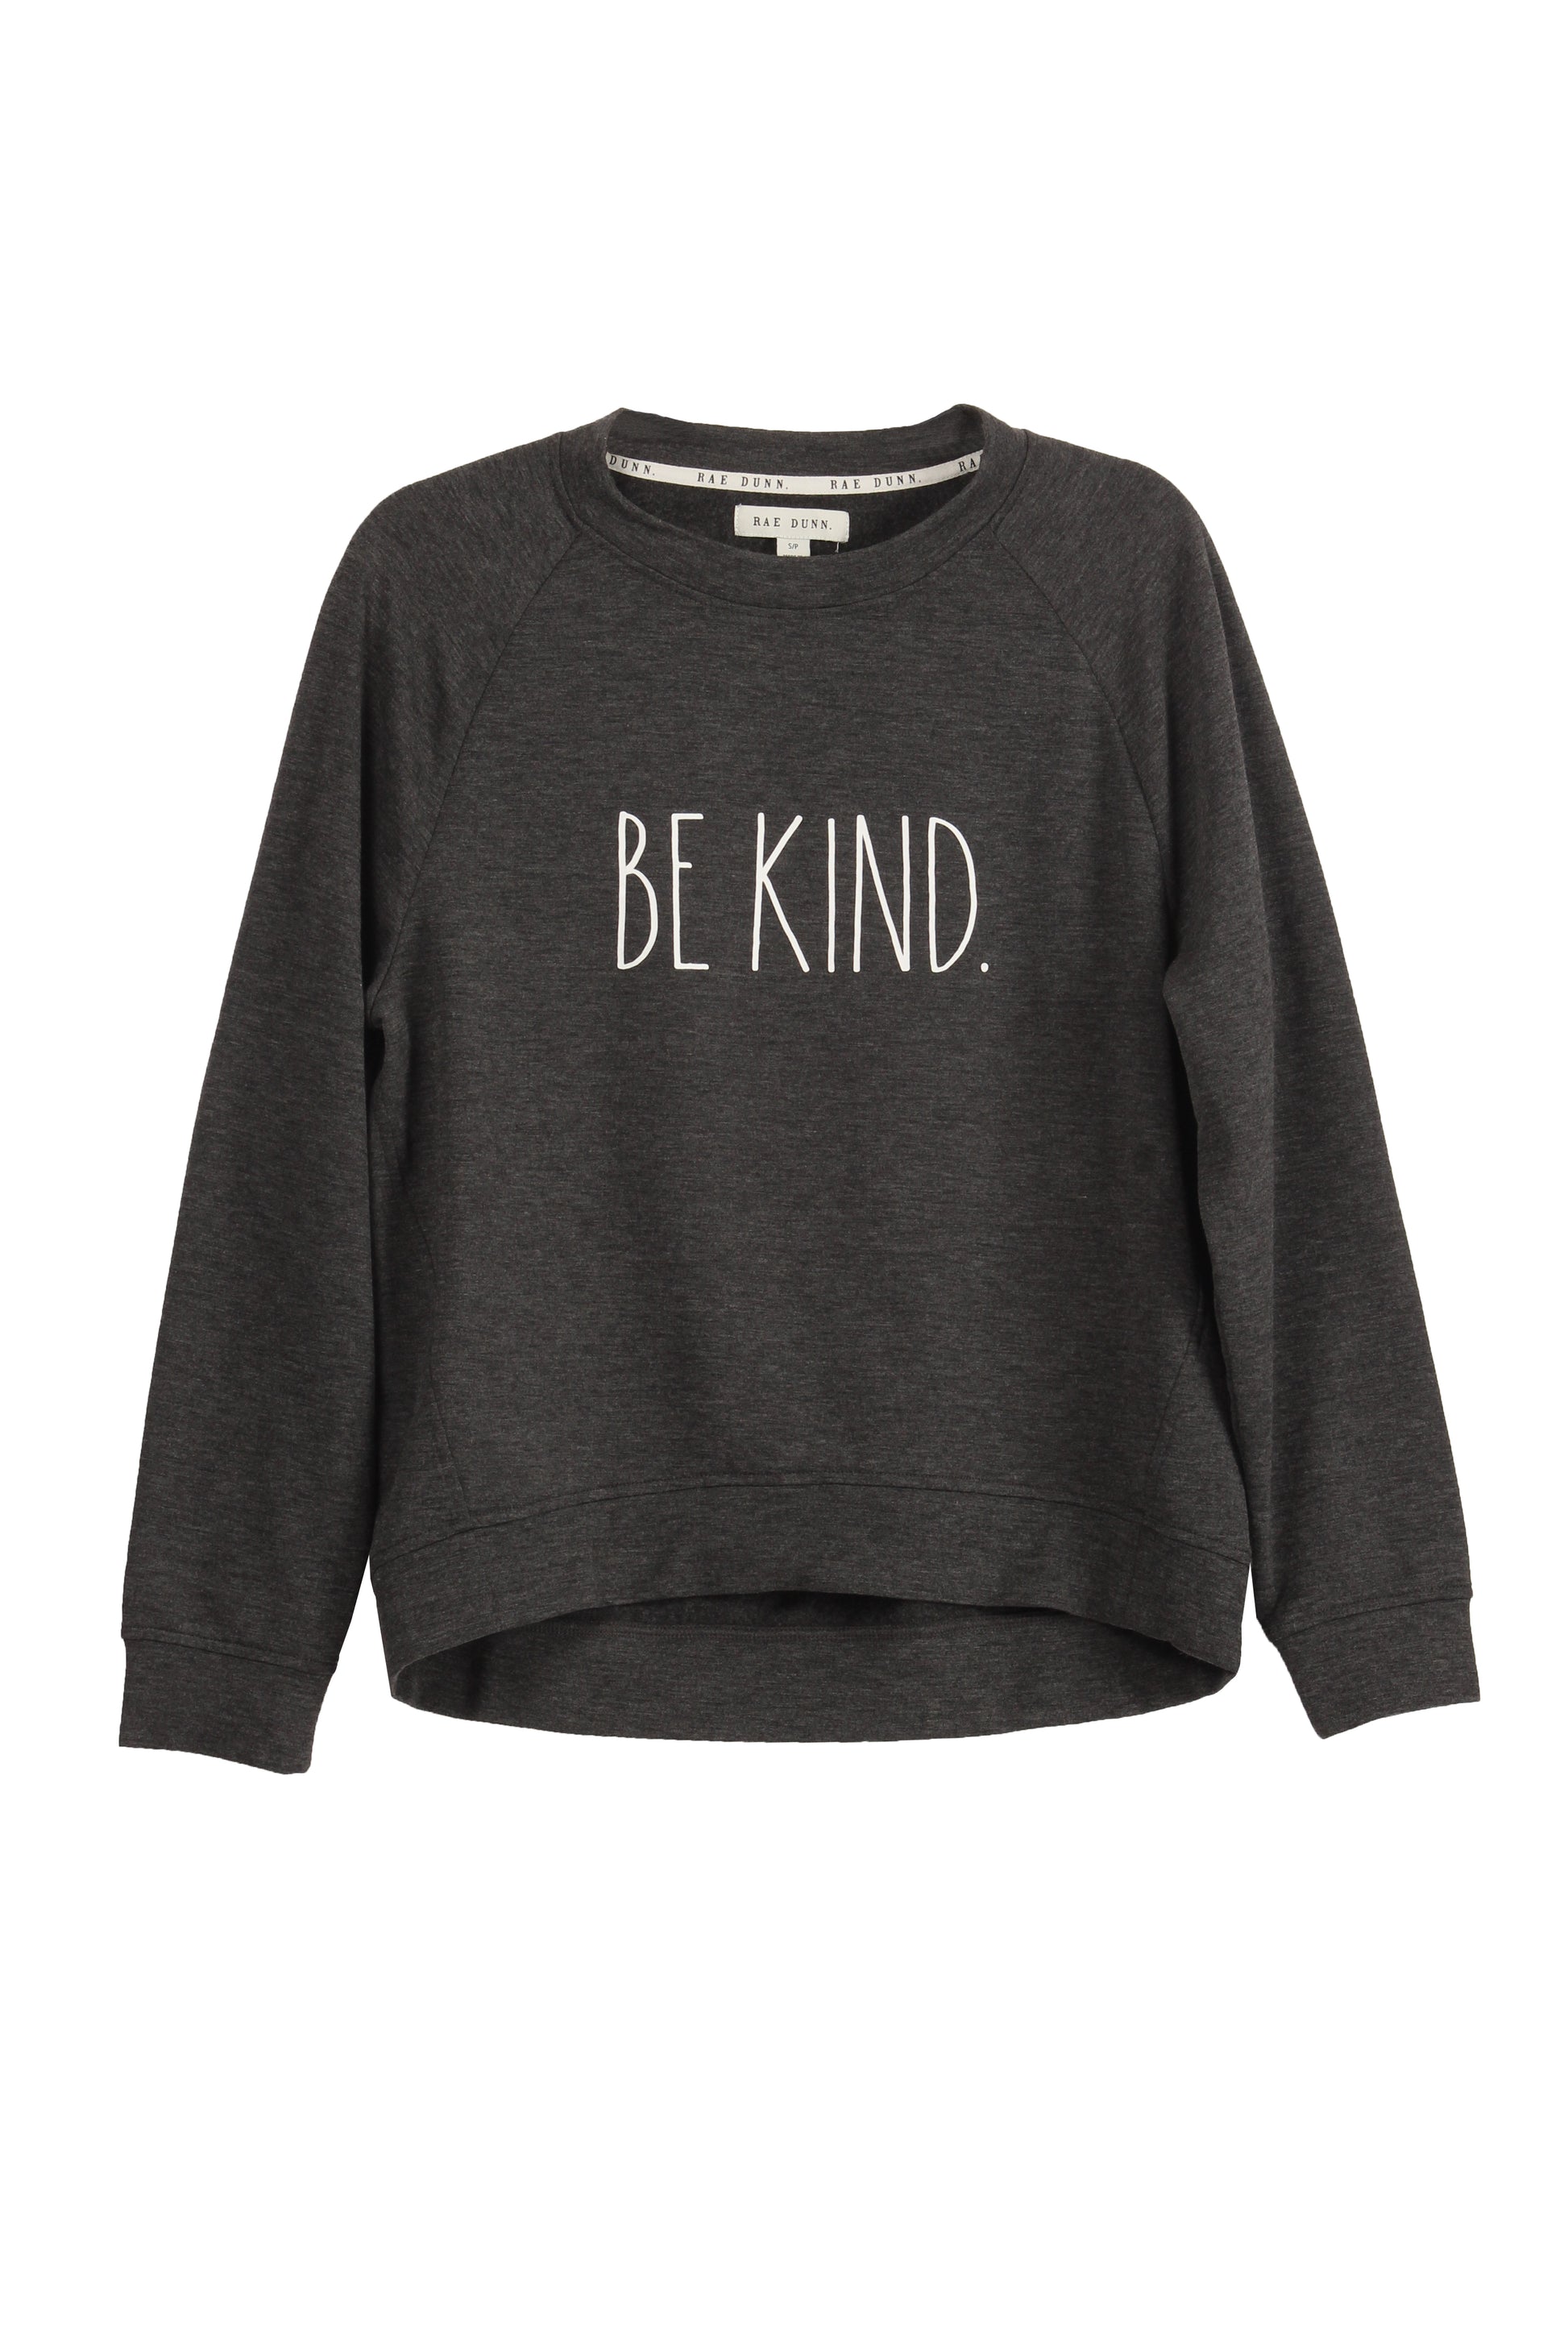 Women's "BE KIND" Studio Raglan Sweatshirt - Shop Rae Dunn Apparel and Sleepwear